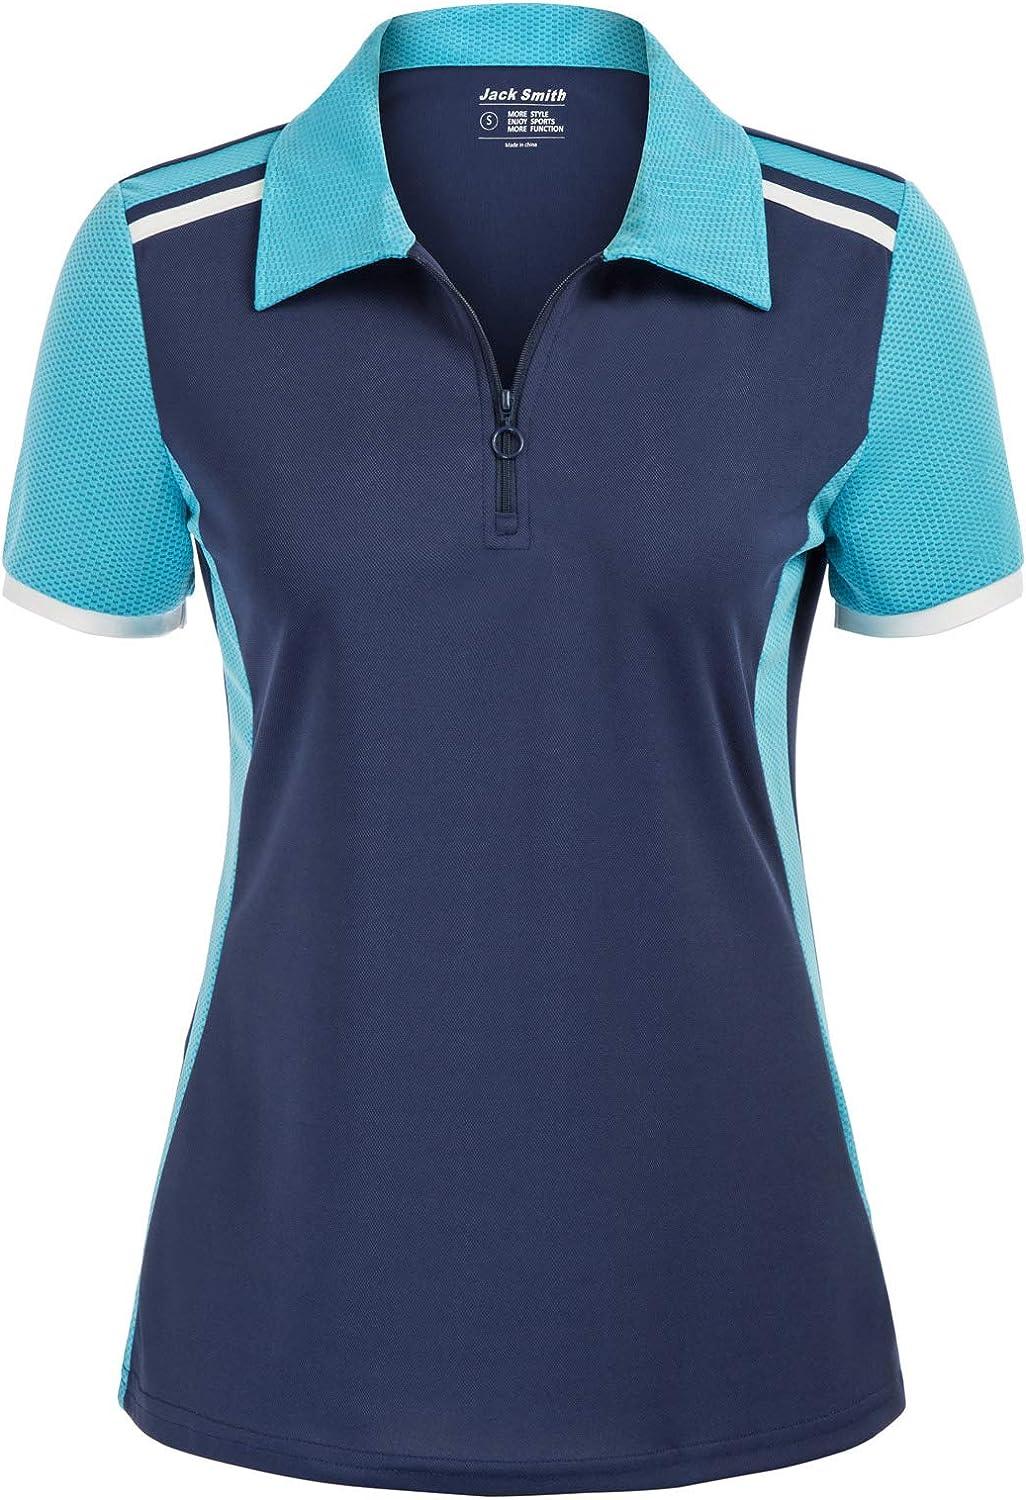 JACK SMITH Womens Short Sleeve Golf Shirts Dry Fit Moisture